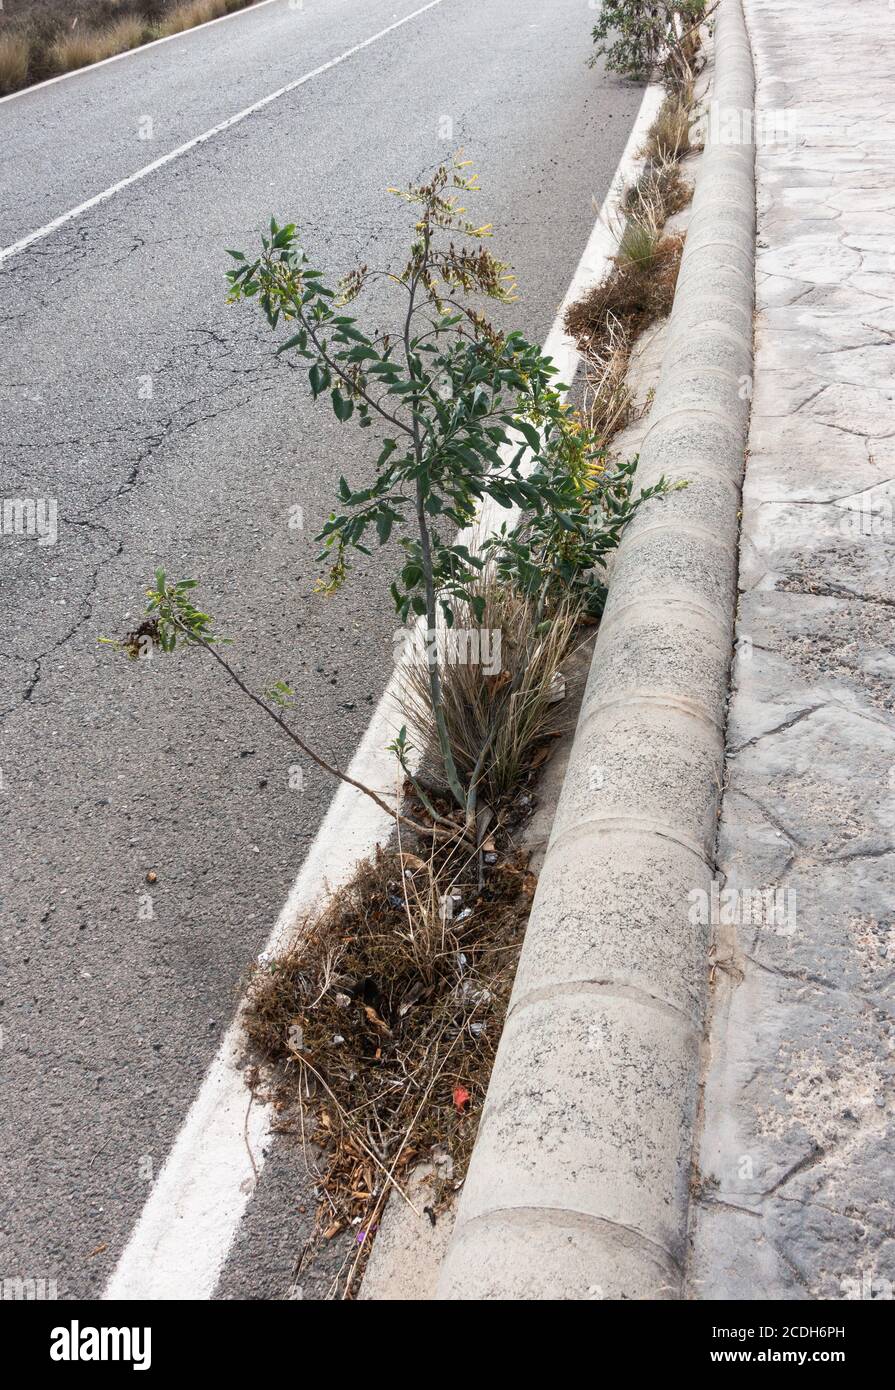 Nicotiana Glauca (Tree tobacco) growing through Tarmac on roadside in Spain Stock Photo